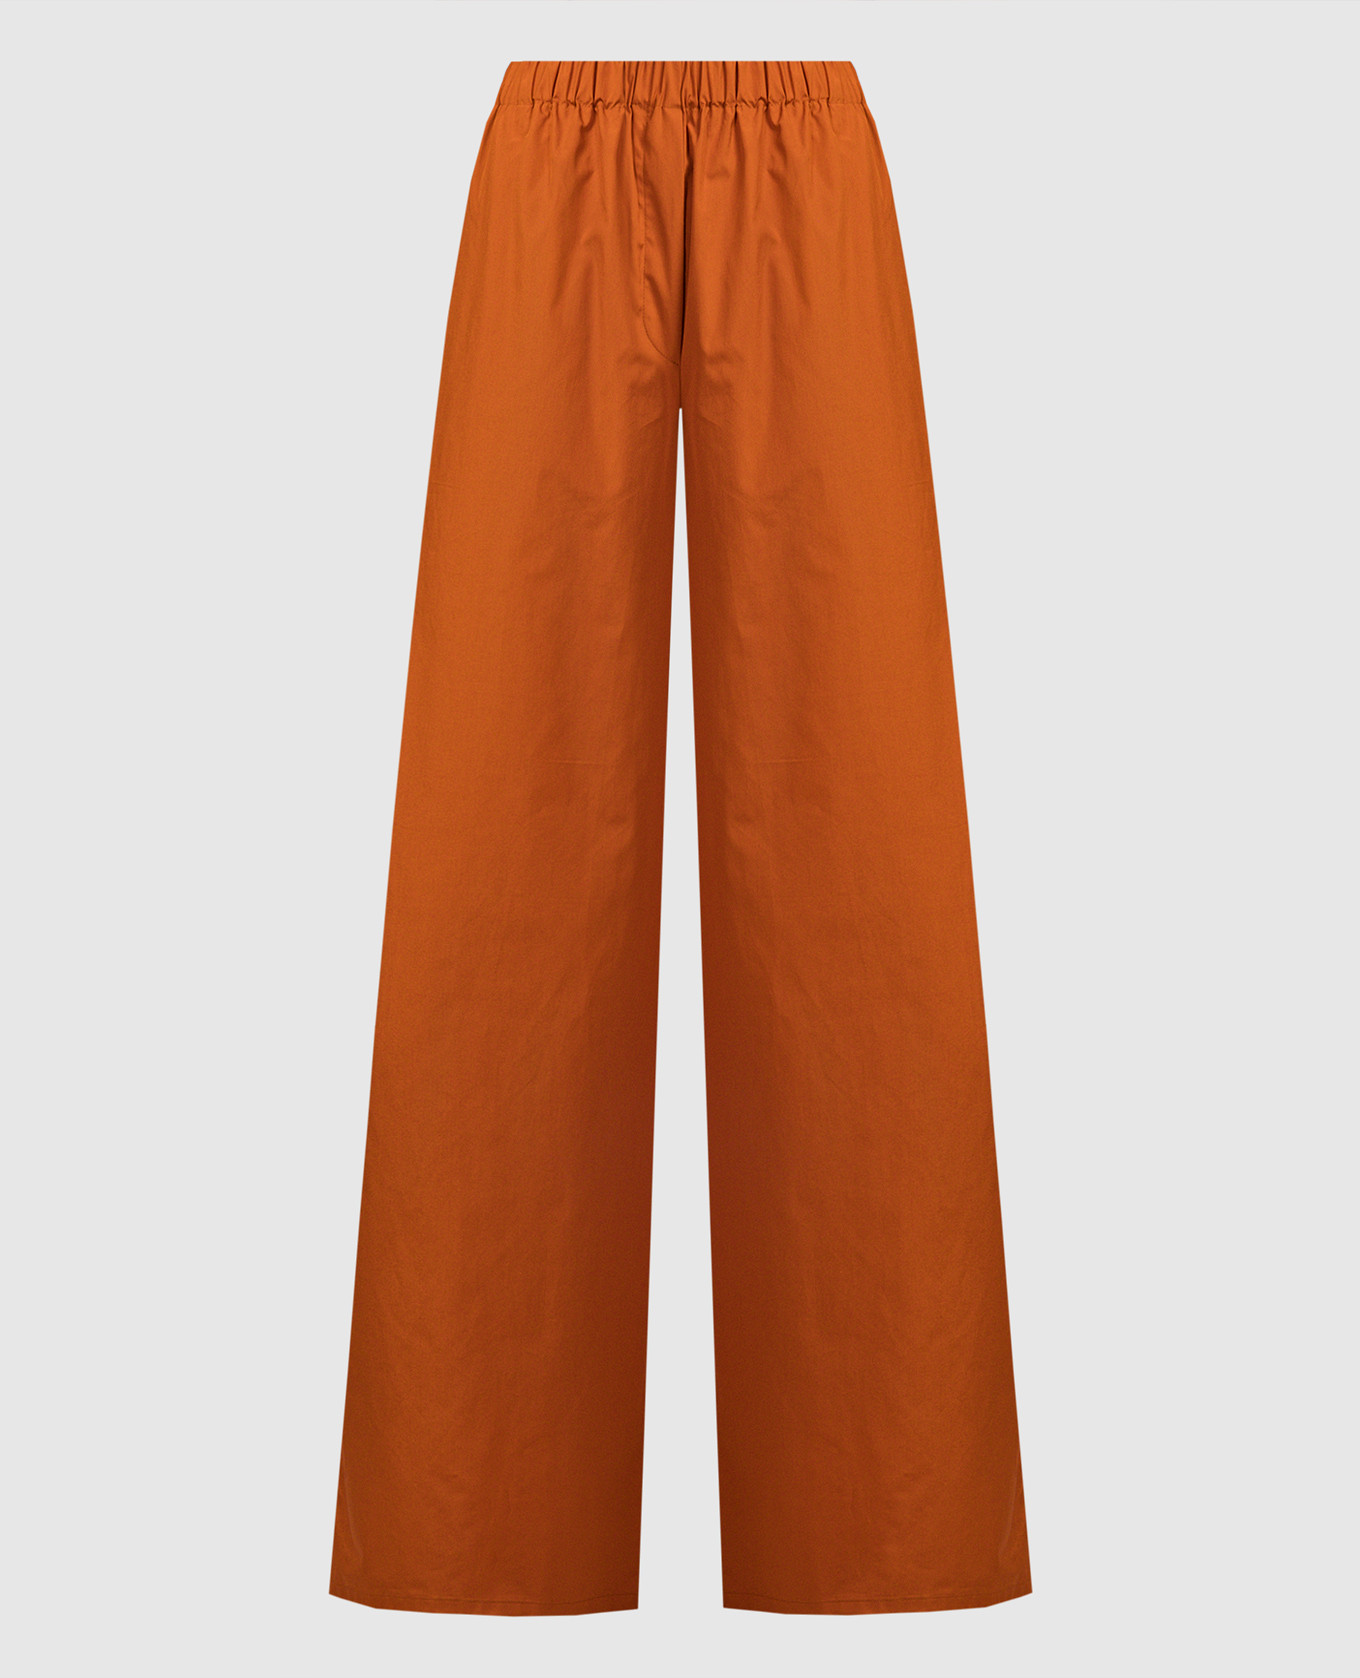 NAVIGLI orange pants